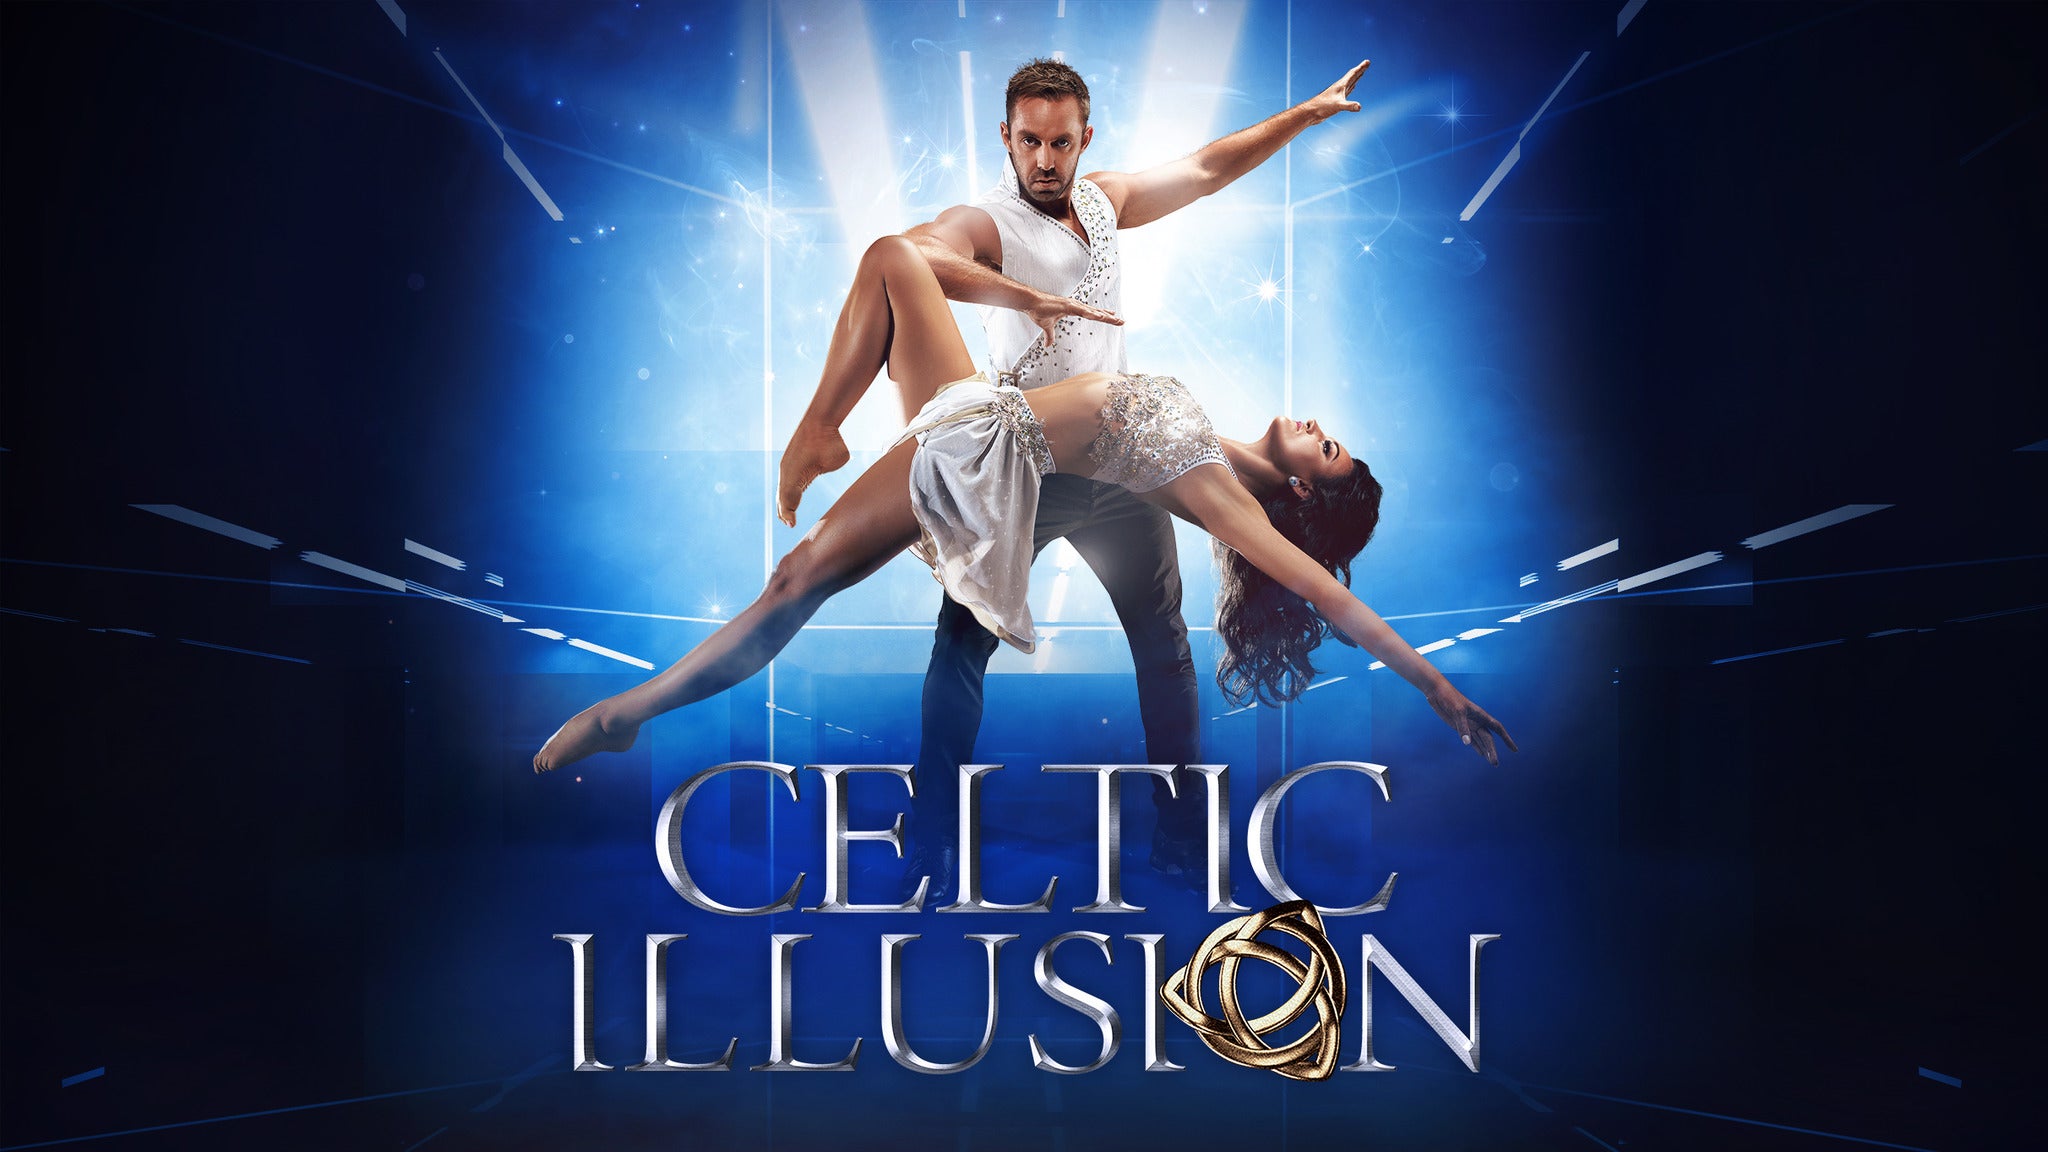 Celtic Illusion in Kingston promo photo for Artist presale offer code